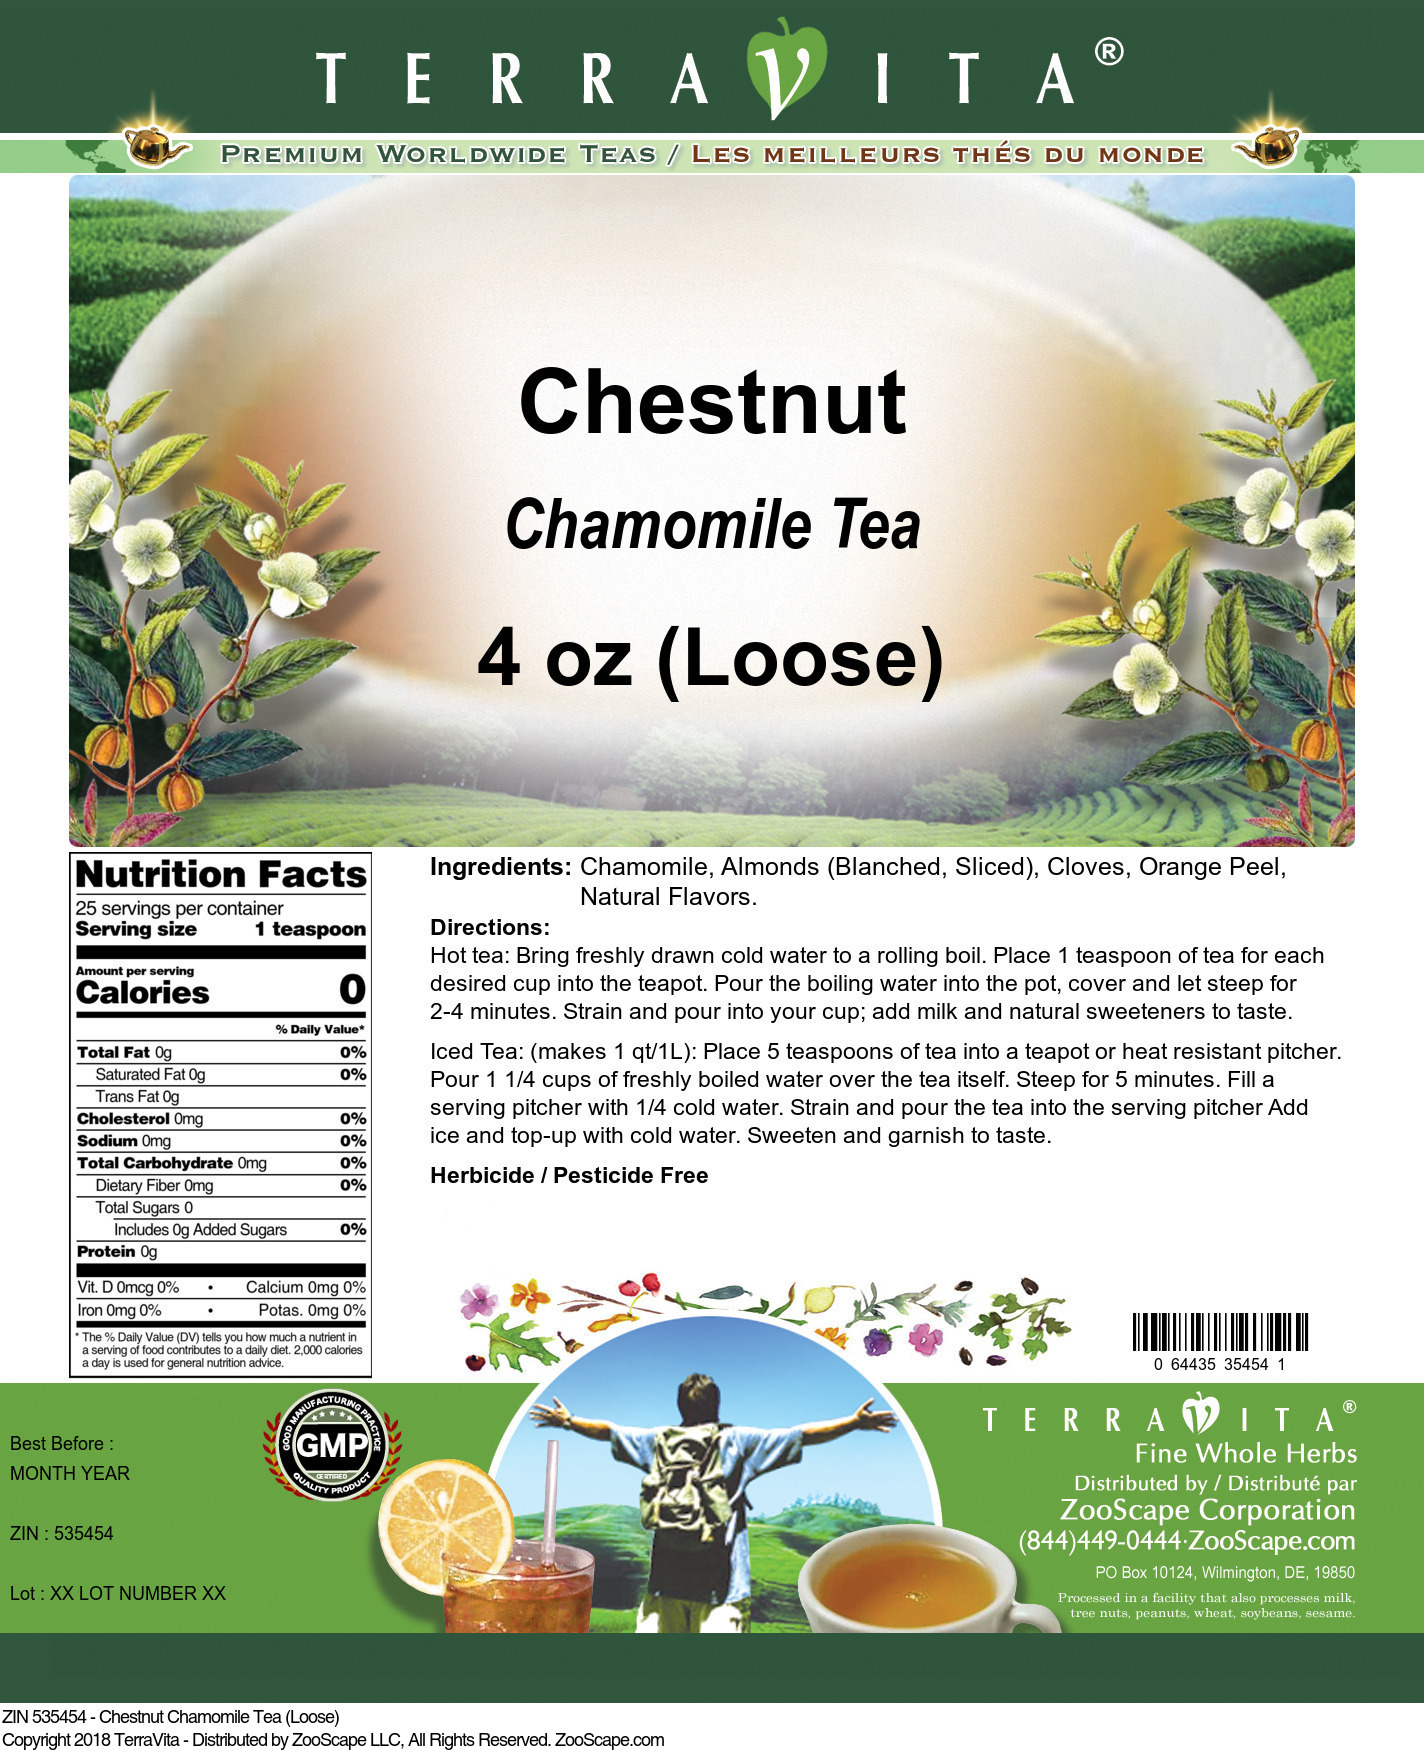 Chestnut Chamomile Tea (Loose) - Label